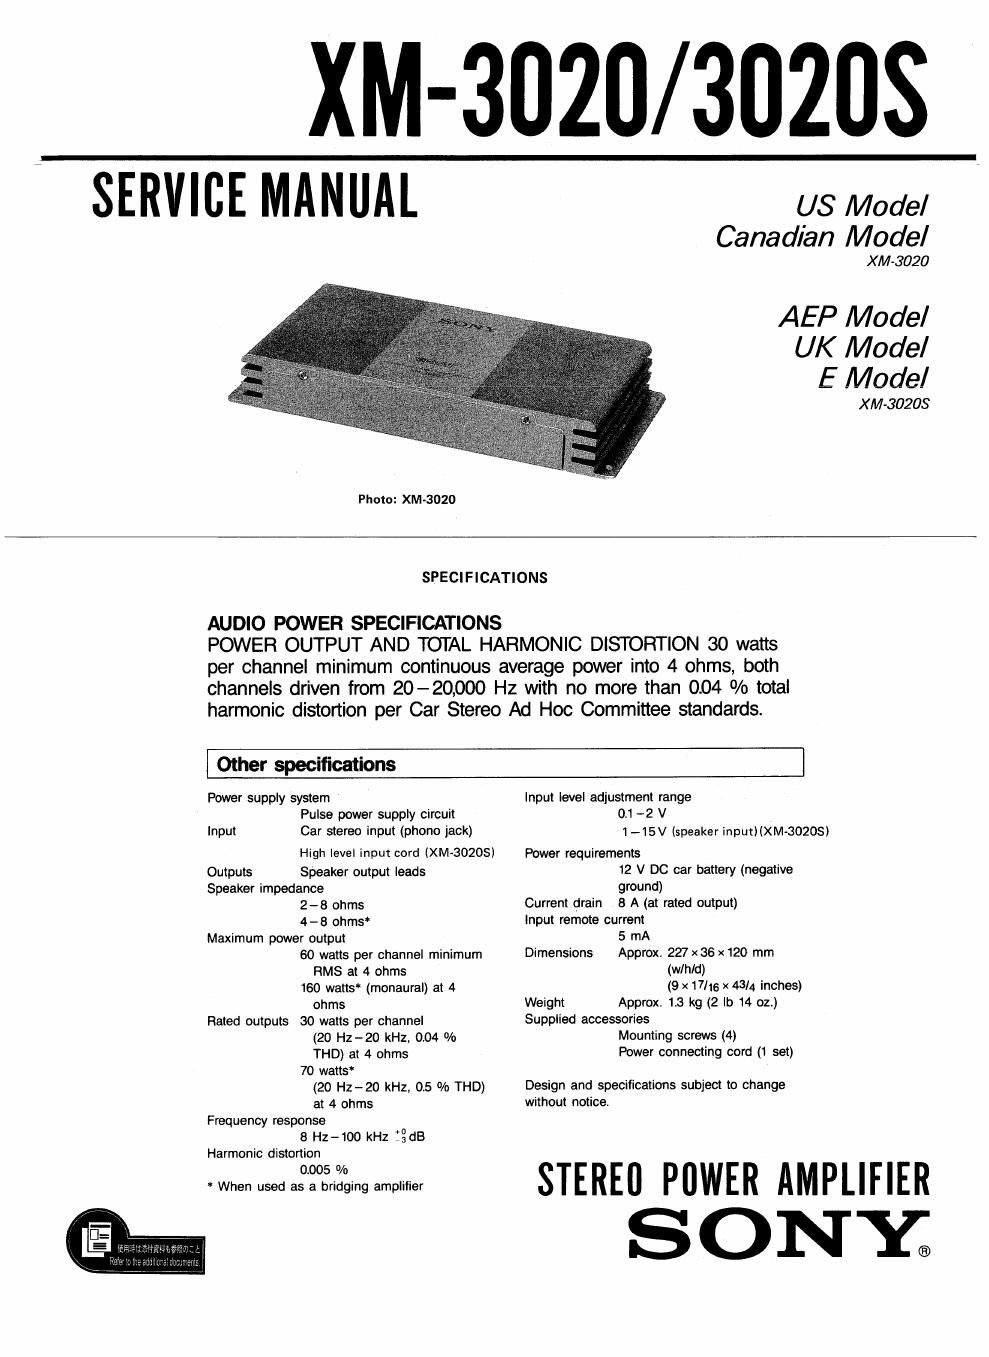 sony xm 3020 service manual